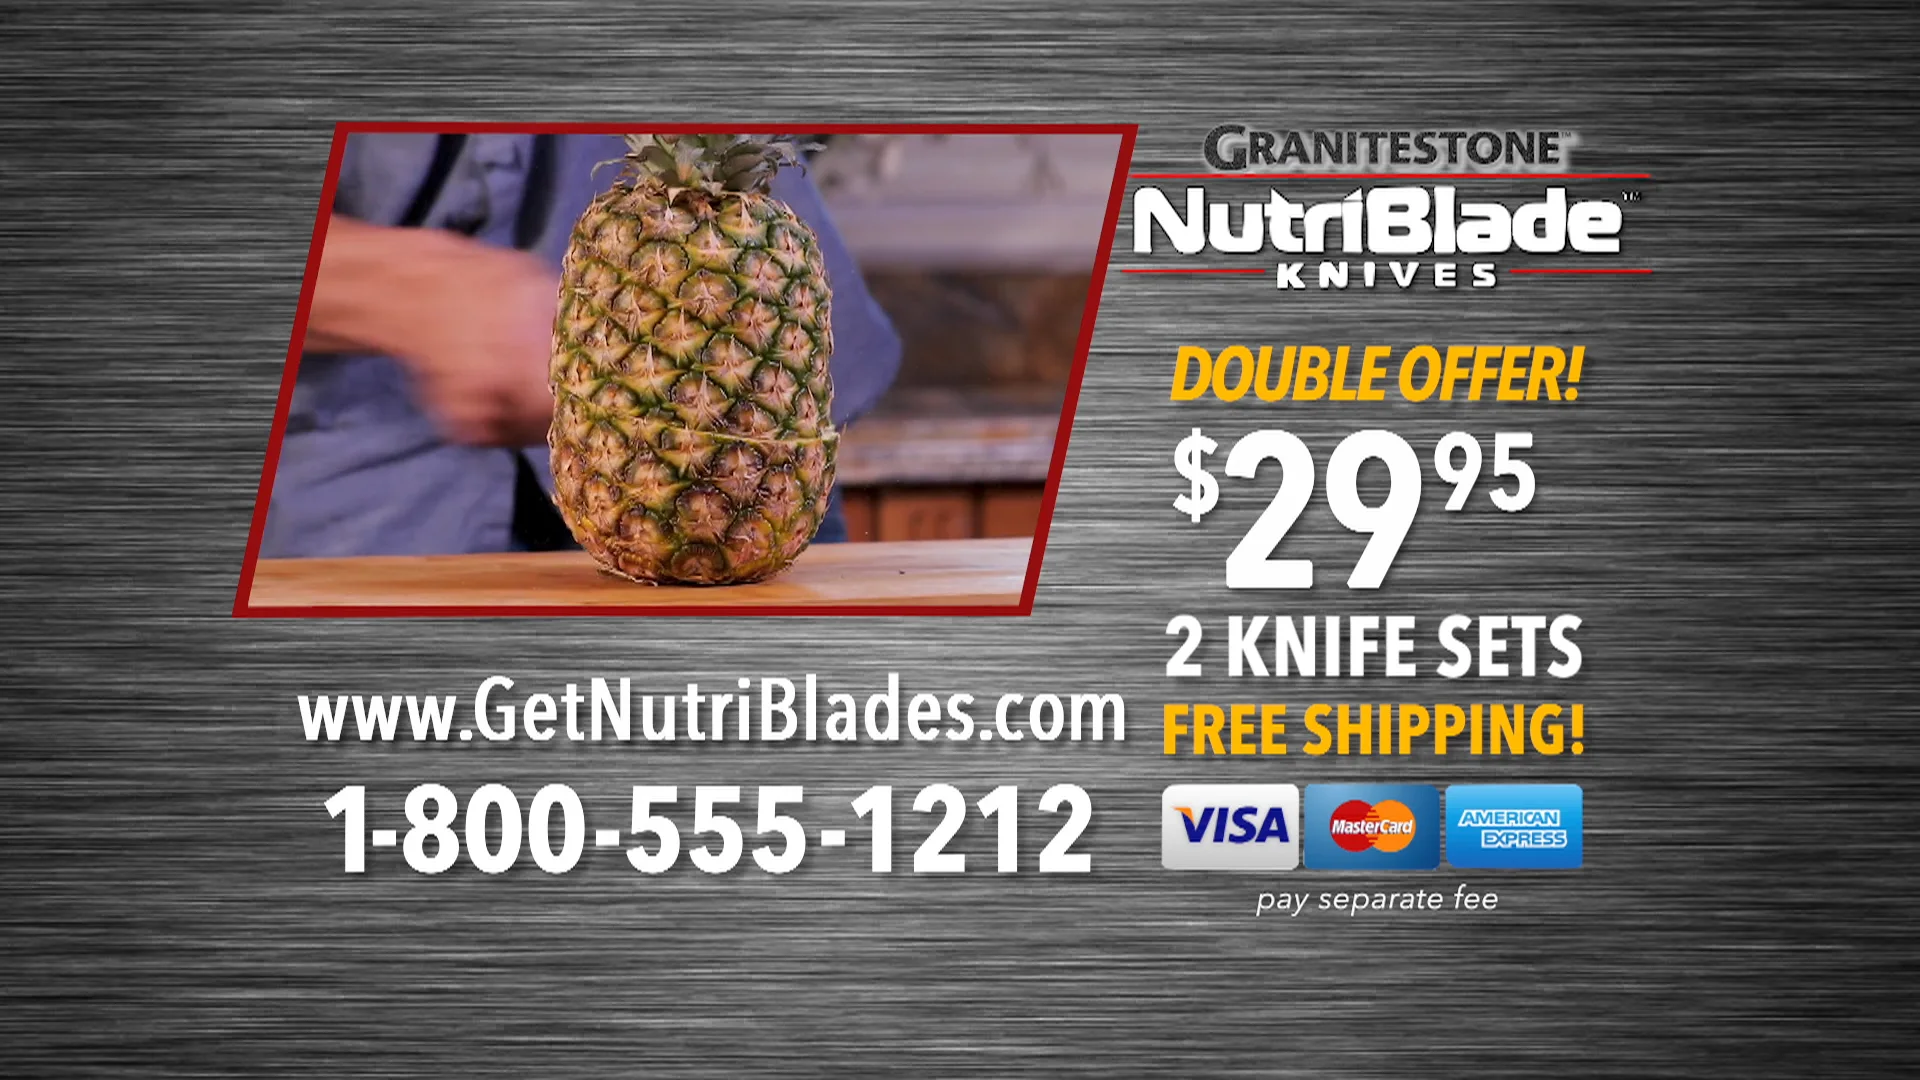 NutriBlade Knives on Vimeo